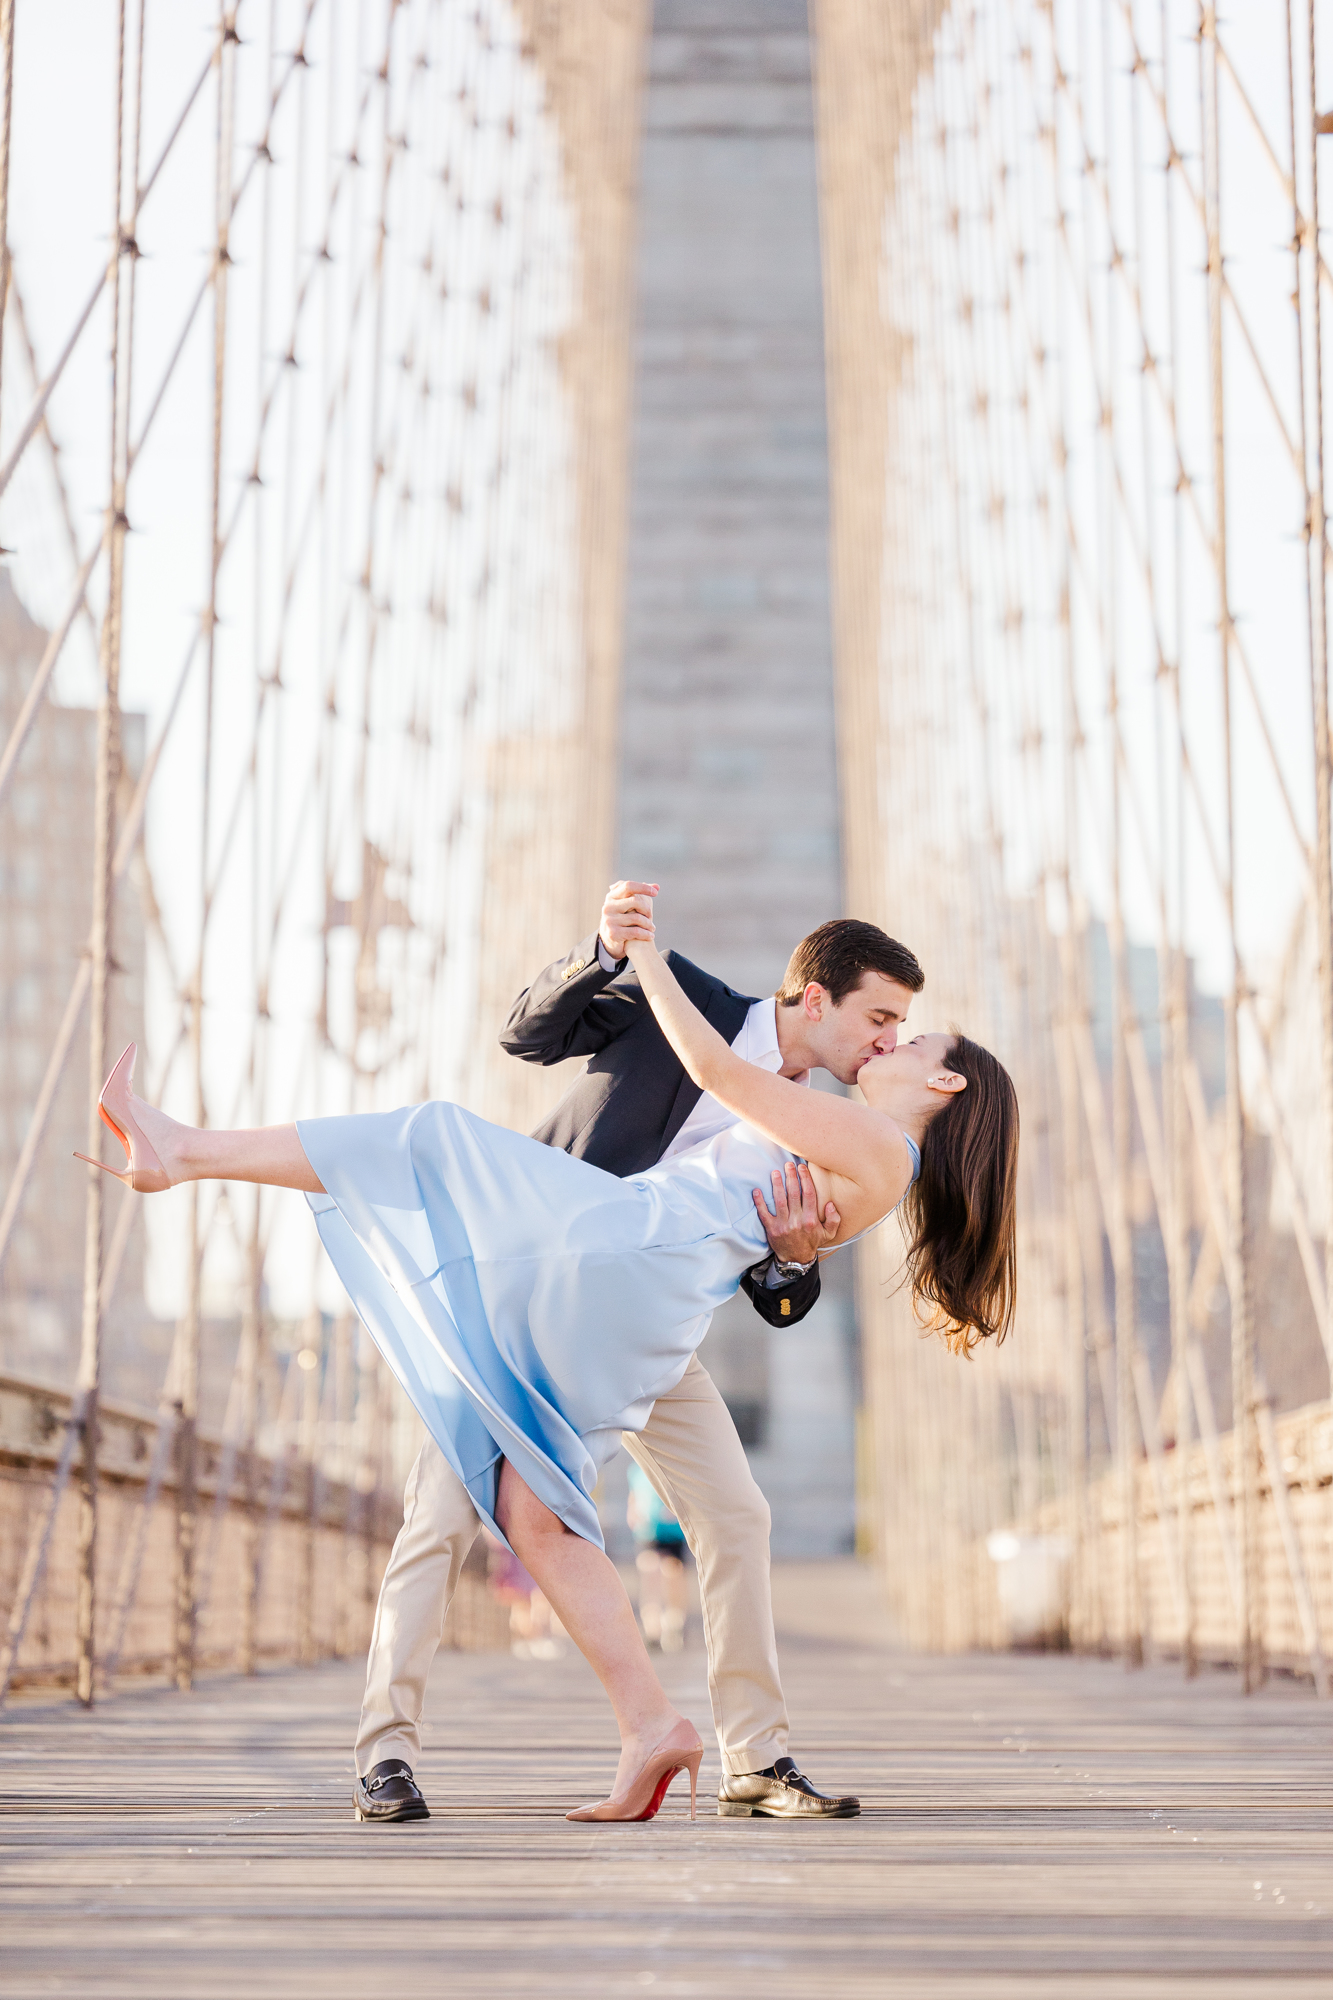 Vibrant New York Engagement Photos on the Brooklyn Bridge